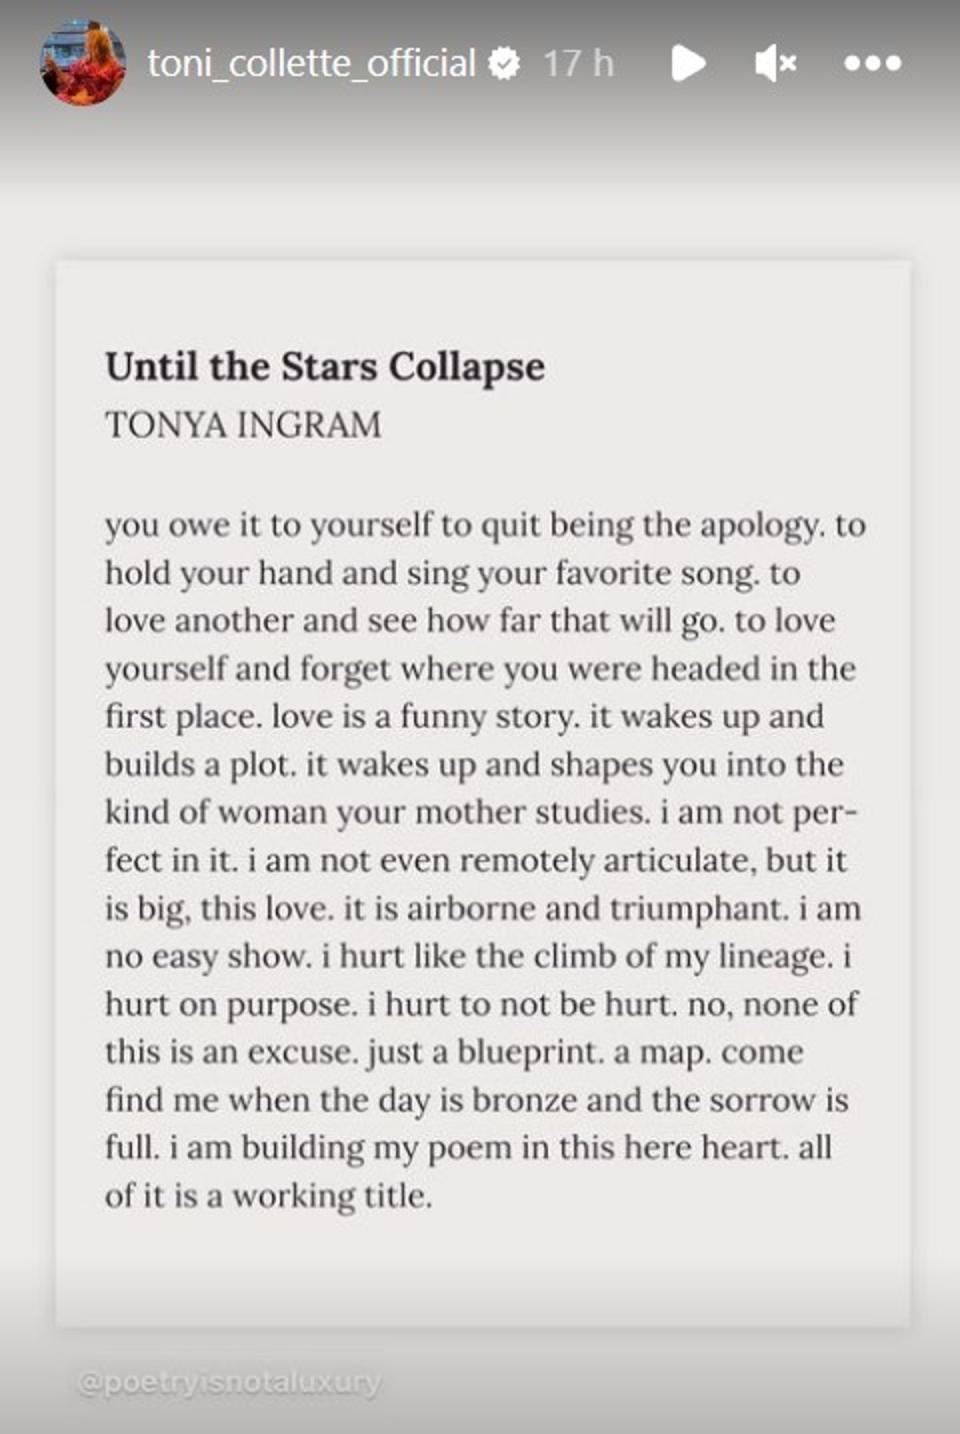 Collette shared this poem from US-based activist Tony Ingram (Instagram/ToniCollette)